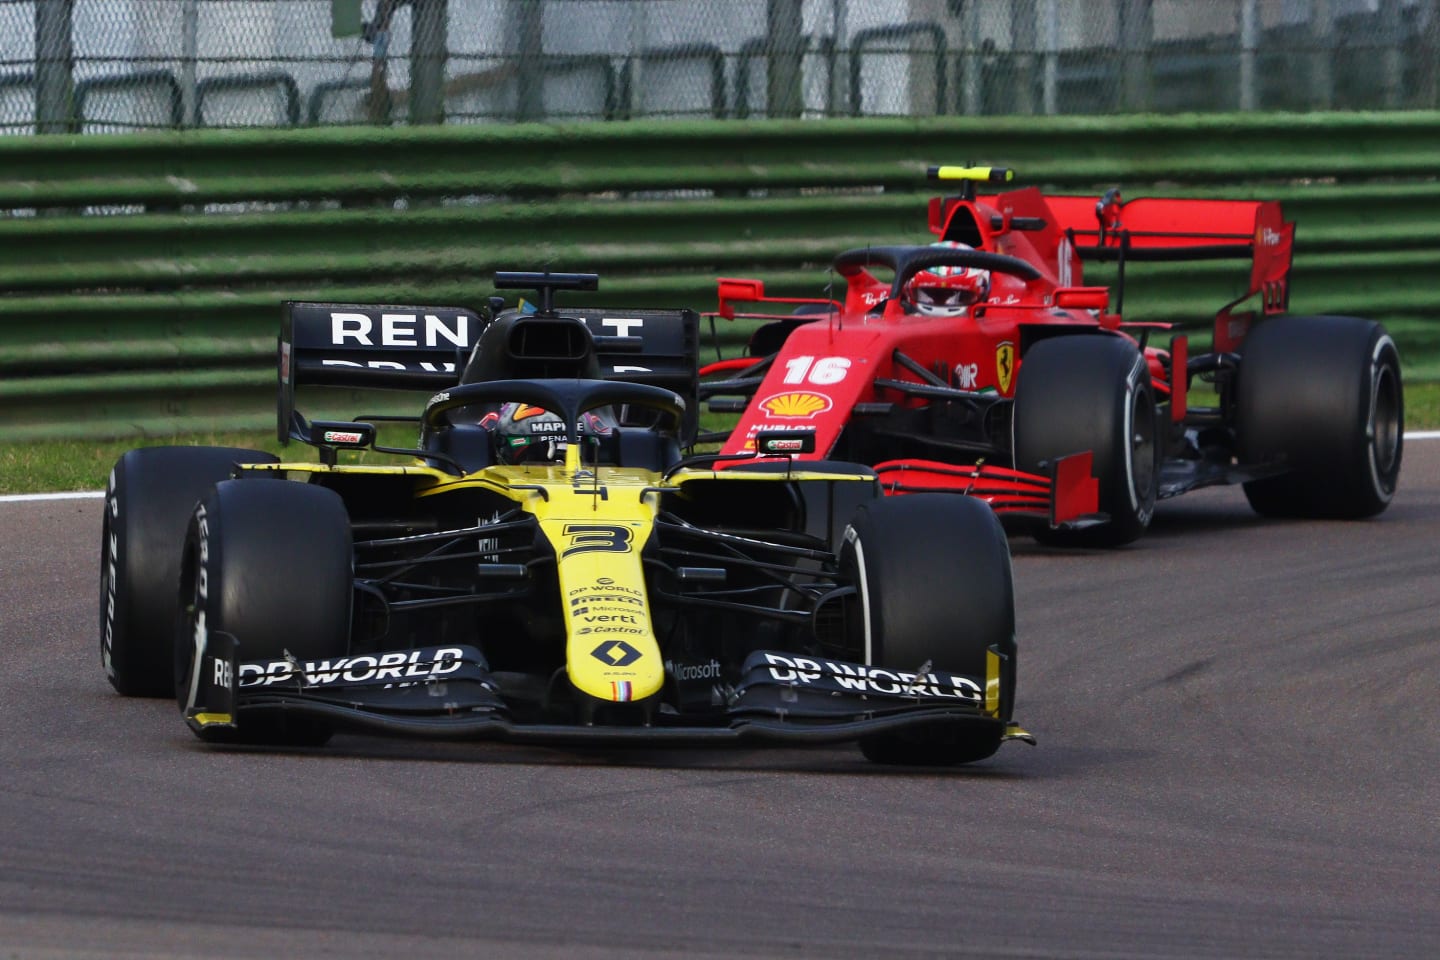 IMOLA, ITALY - NOVEMBER 01: Daniel Ricciardo of Australia driving the (3) Renault Sport Formula One